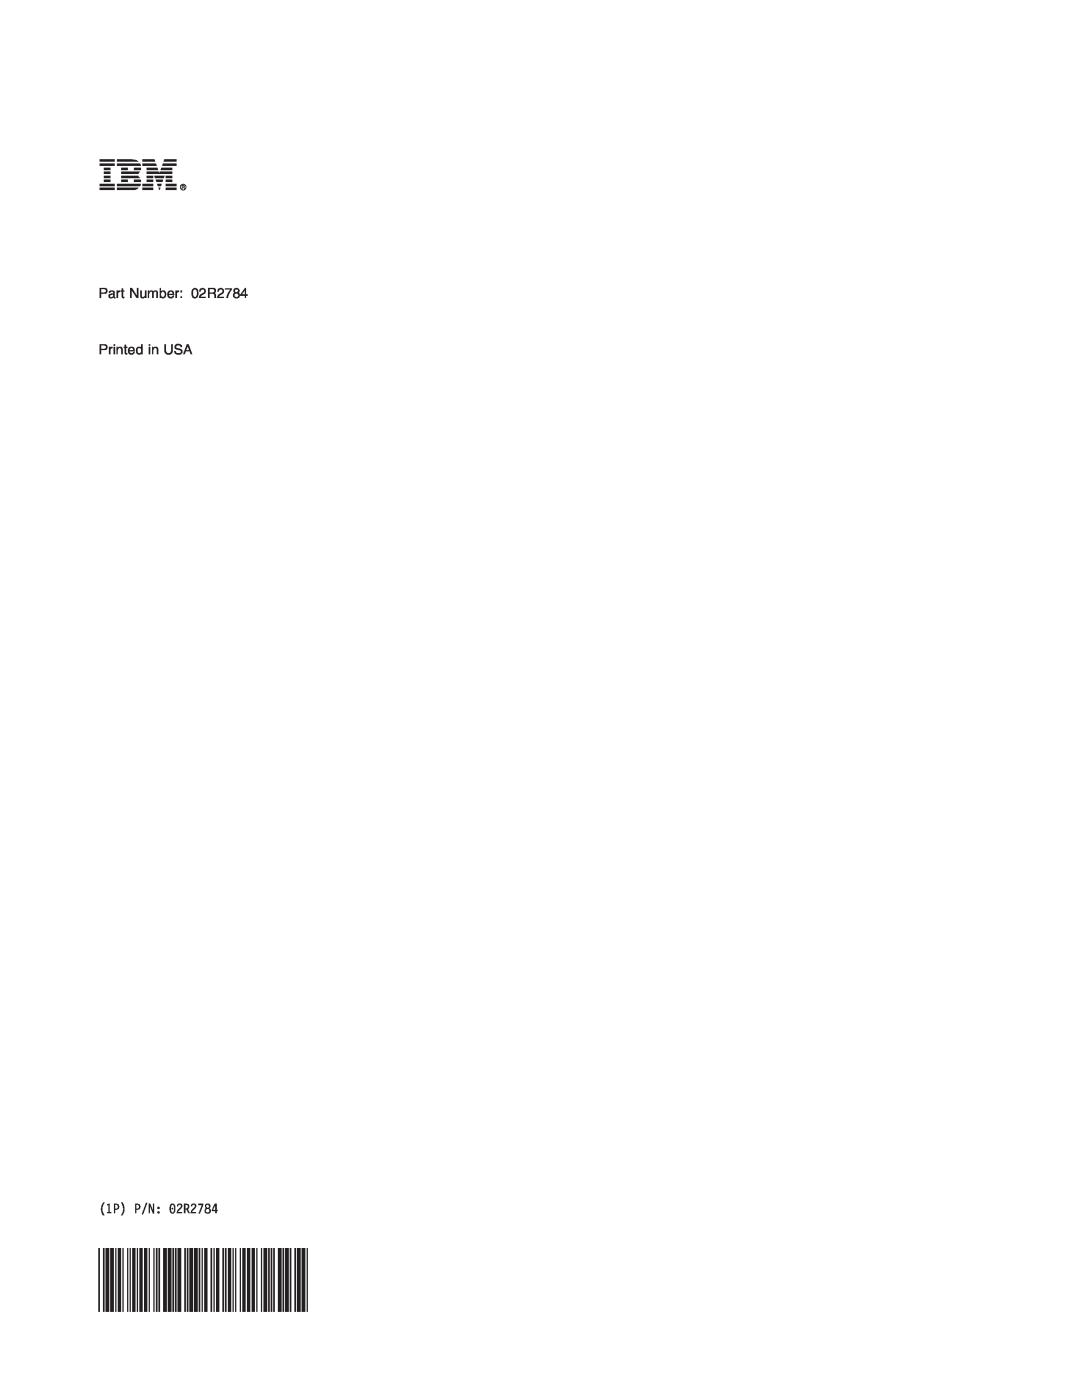 IBM 8870 manual Part Number 02R2784 Printed in USA, 1P P/N 02R2784 